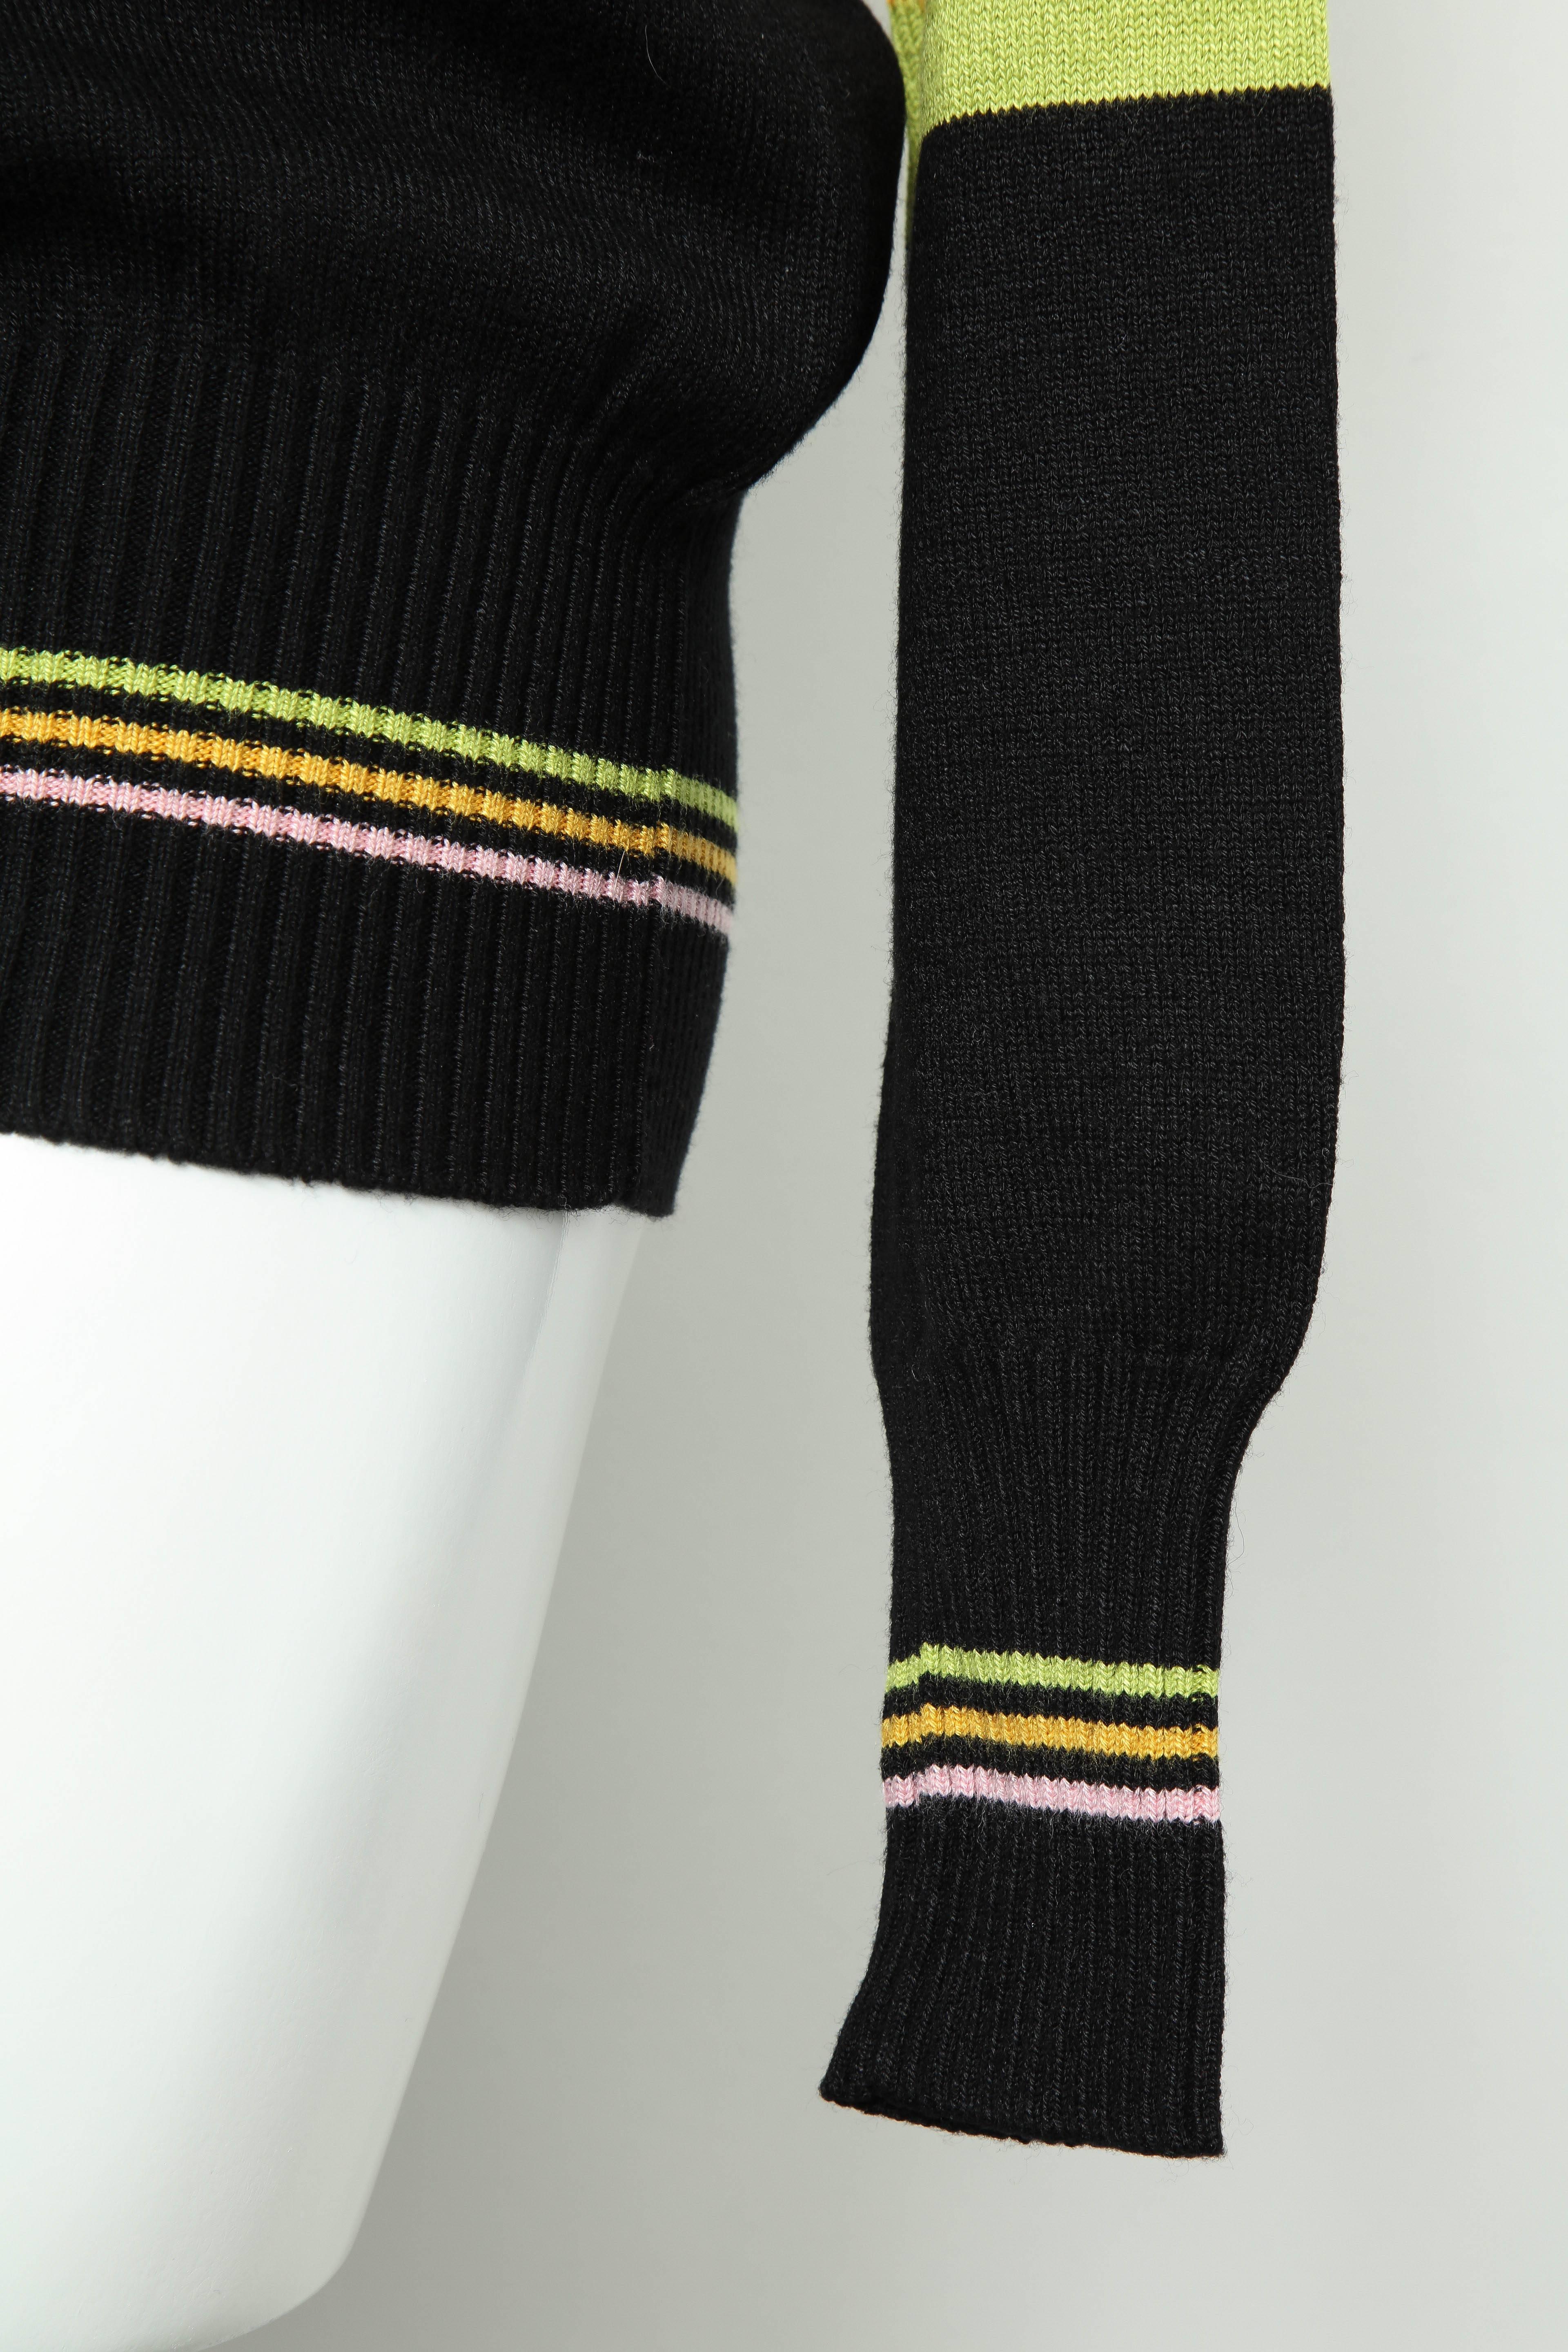 Black John Galliano for Christian Dior School Sweater